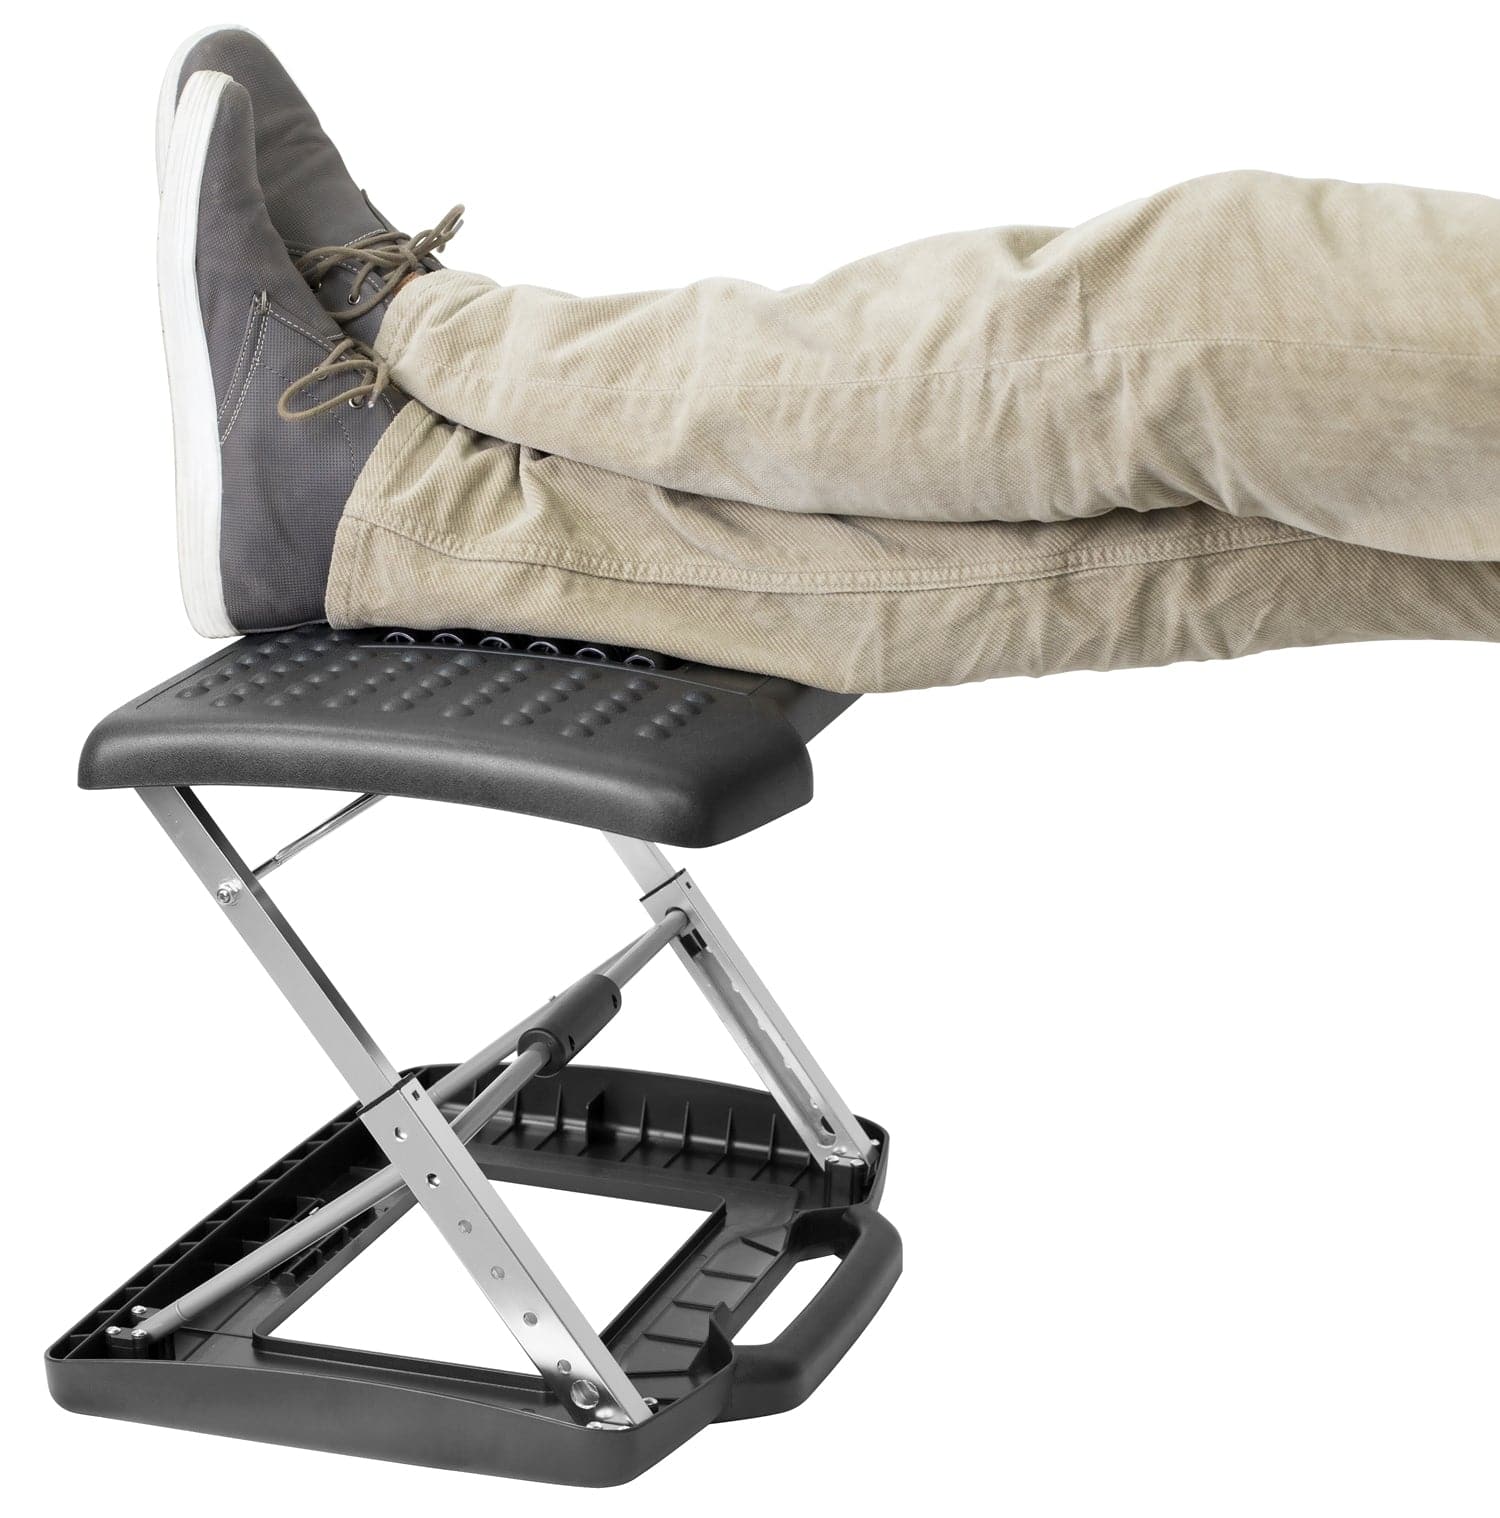 AM108 Wood Foot Rest for Under Desk at Work, Angle Free Adjustable